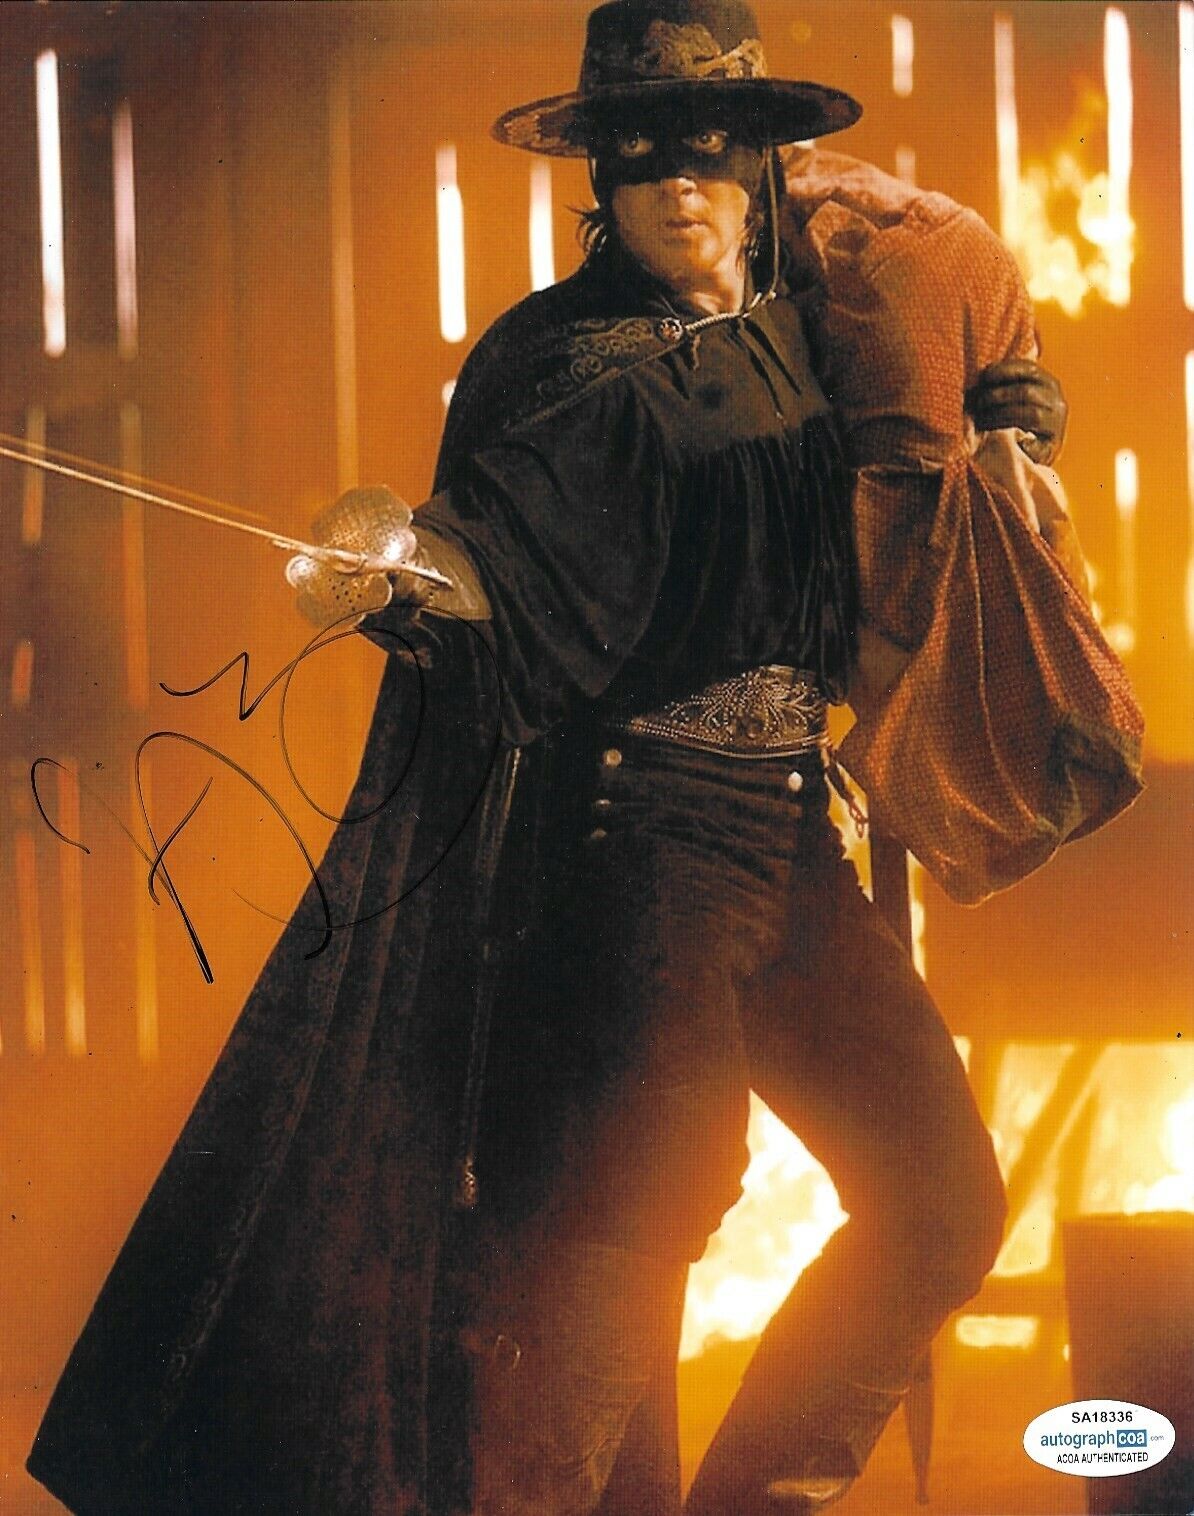 Antonio Banderas Signed The Legend Of Zorro 10x8 Photo Poster painting AFTAL ACOA